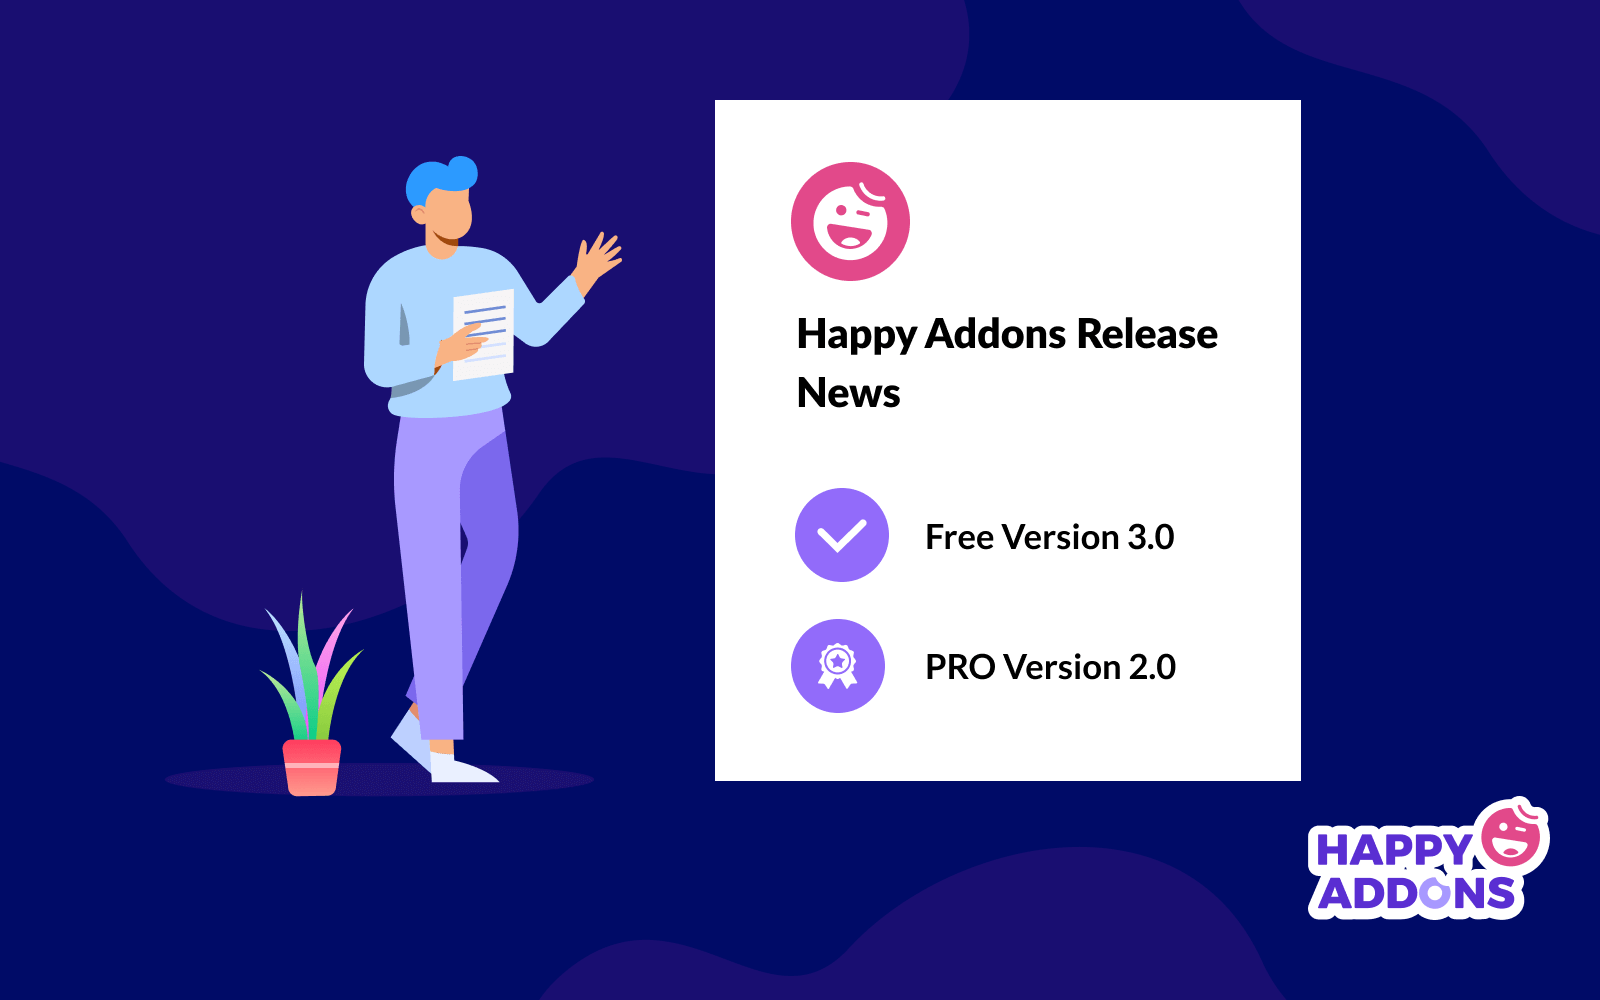 Happy Addons Release